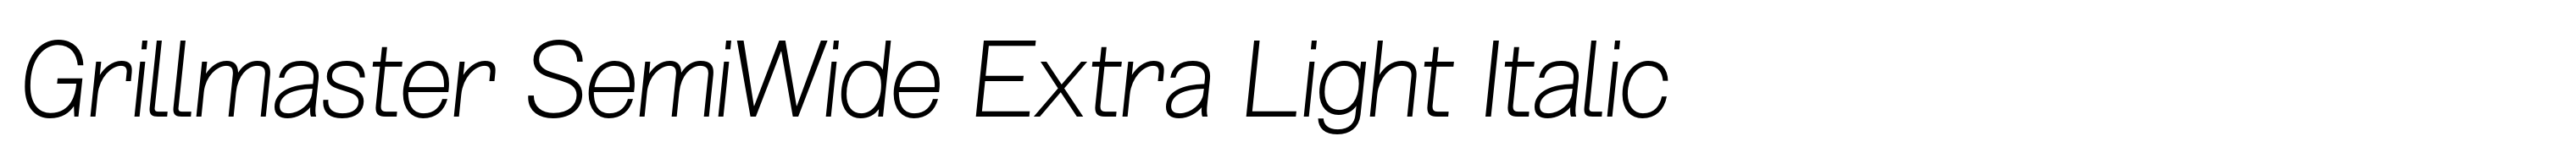 Grillmaster SemiWide Extra Light Italic